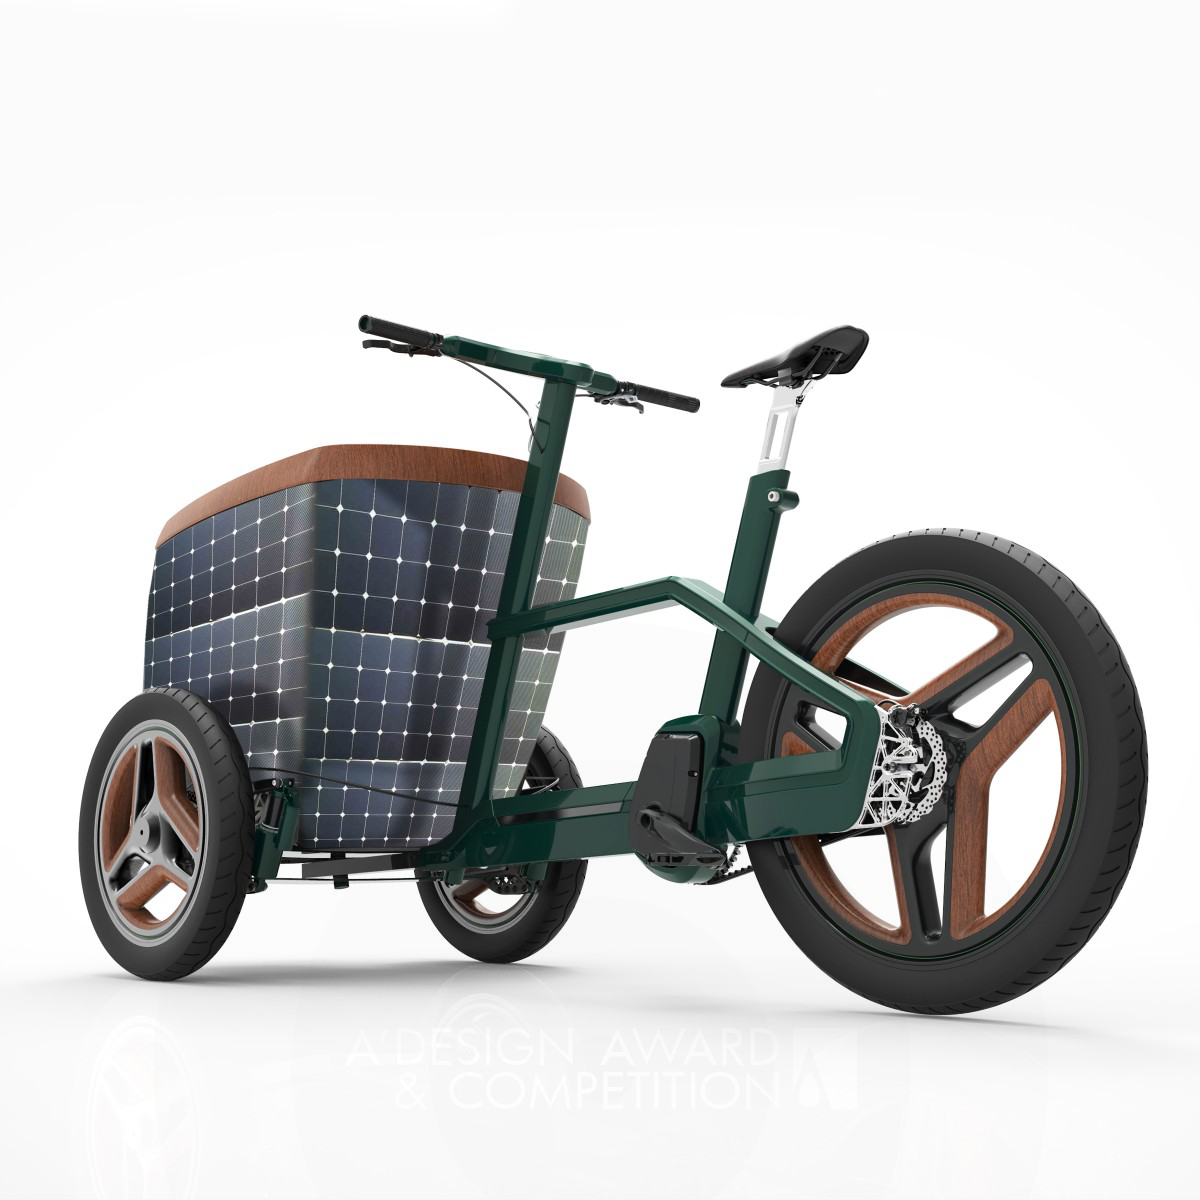 CarQon Solar <b>Electric Bicycle Driven by Sun Power